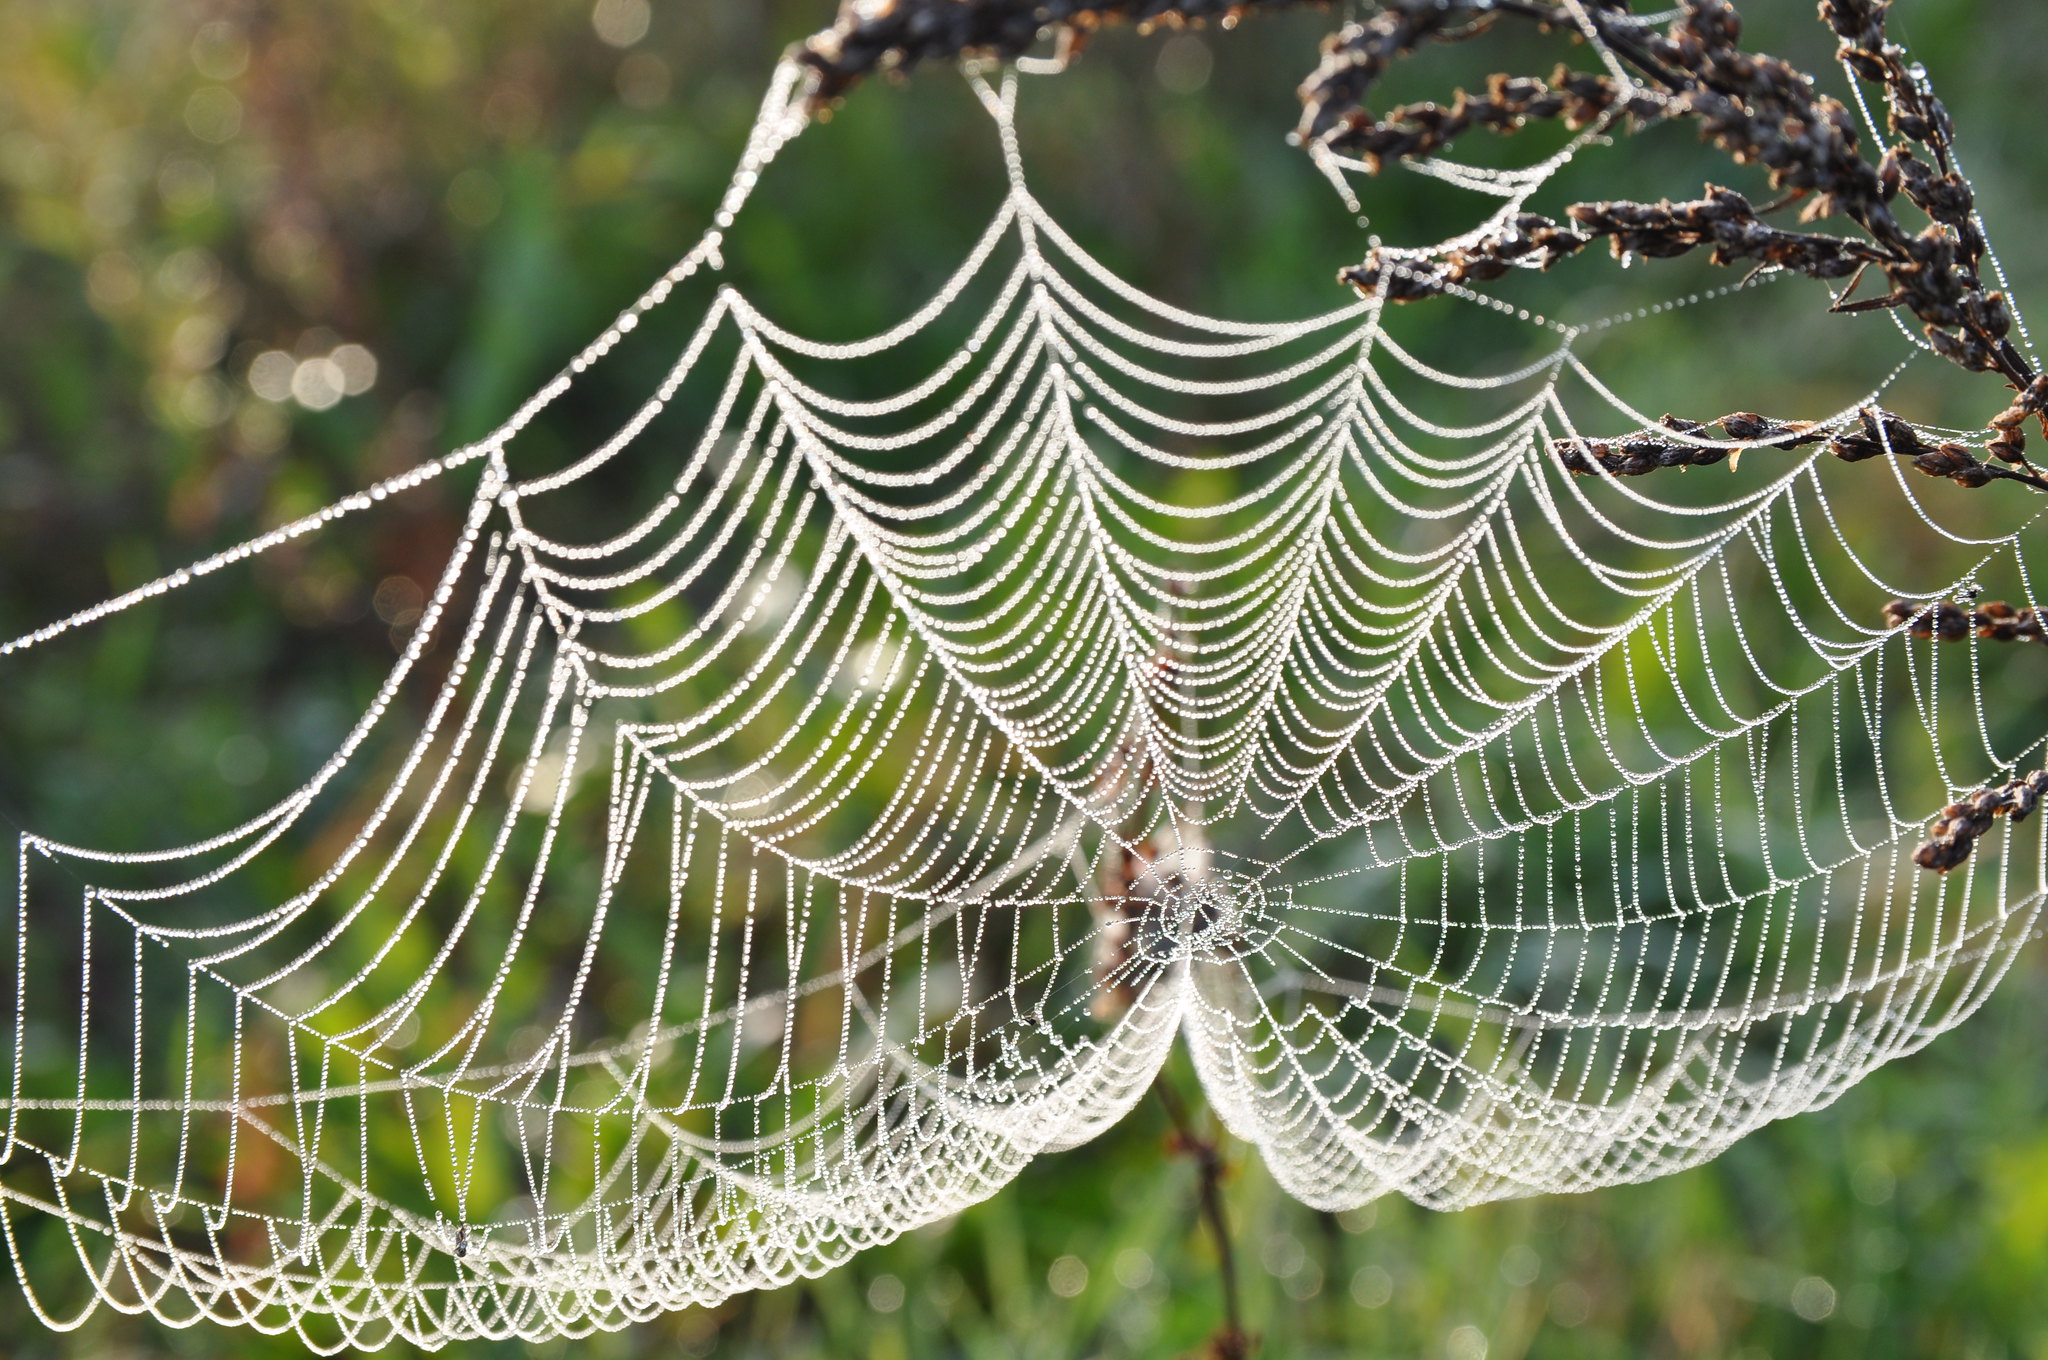 Weaving a web of wonder